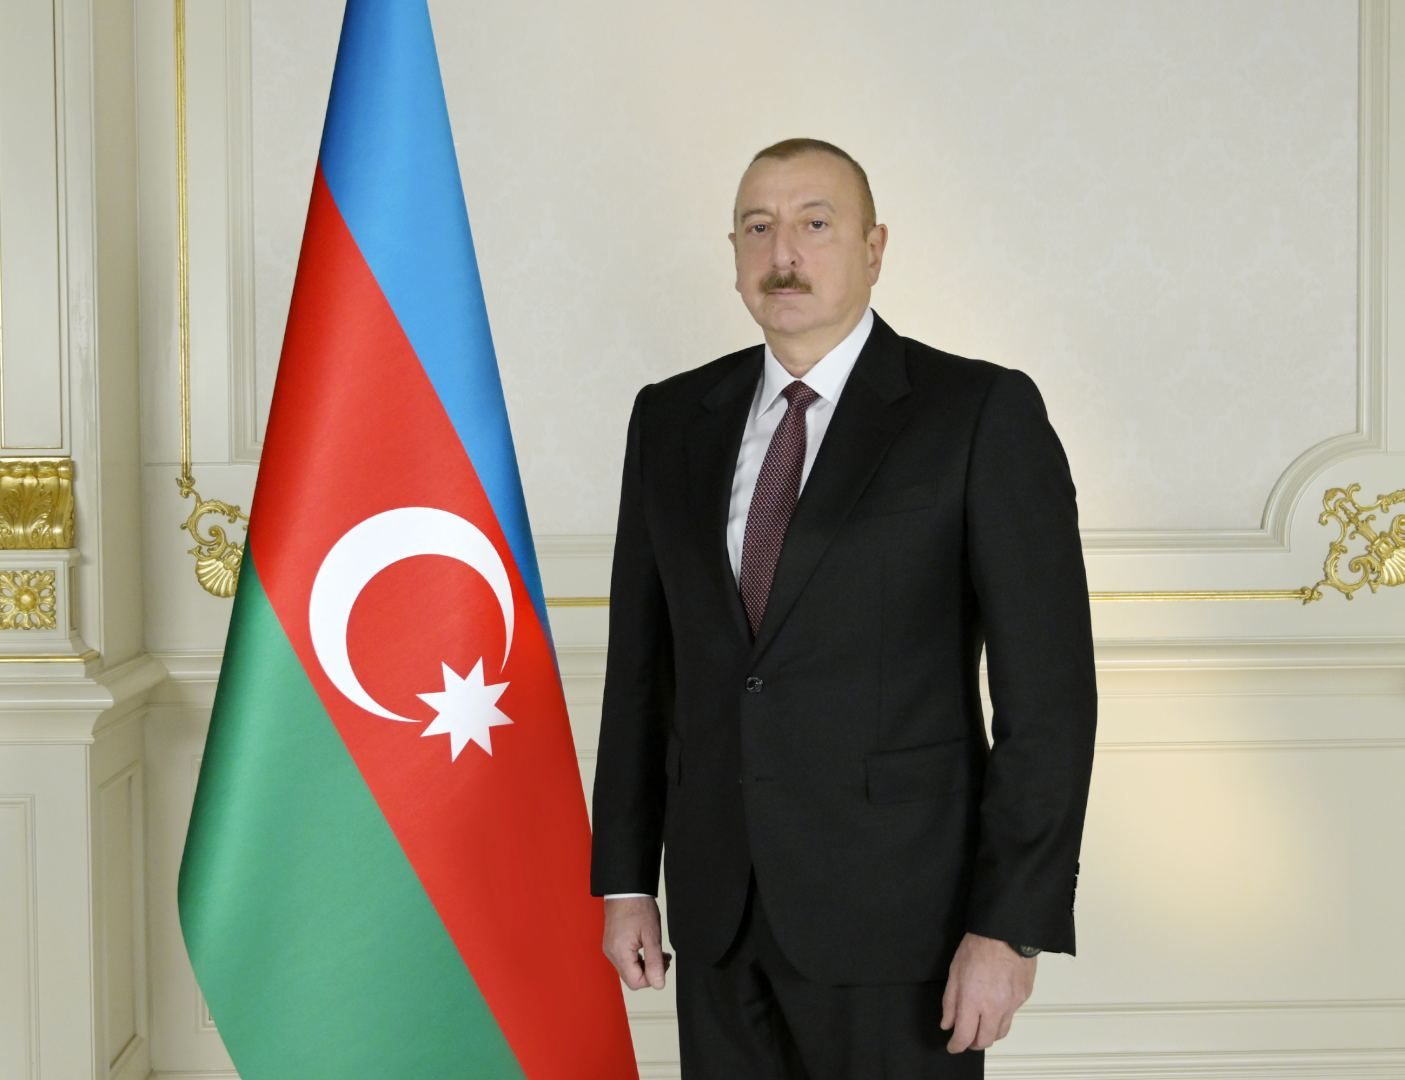 President Ilham Aliyev decrees measures to improve electricity supply in Azerbaijan